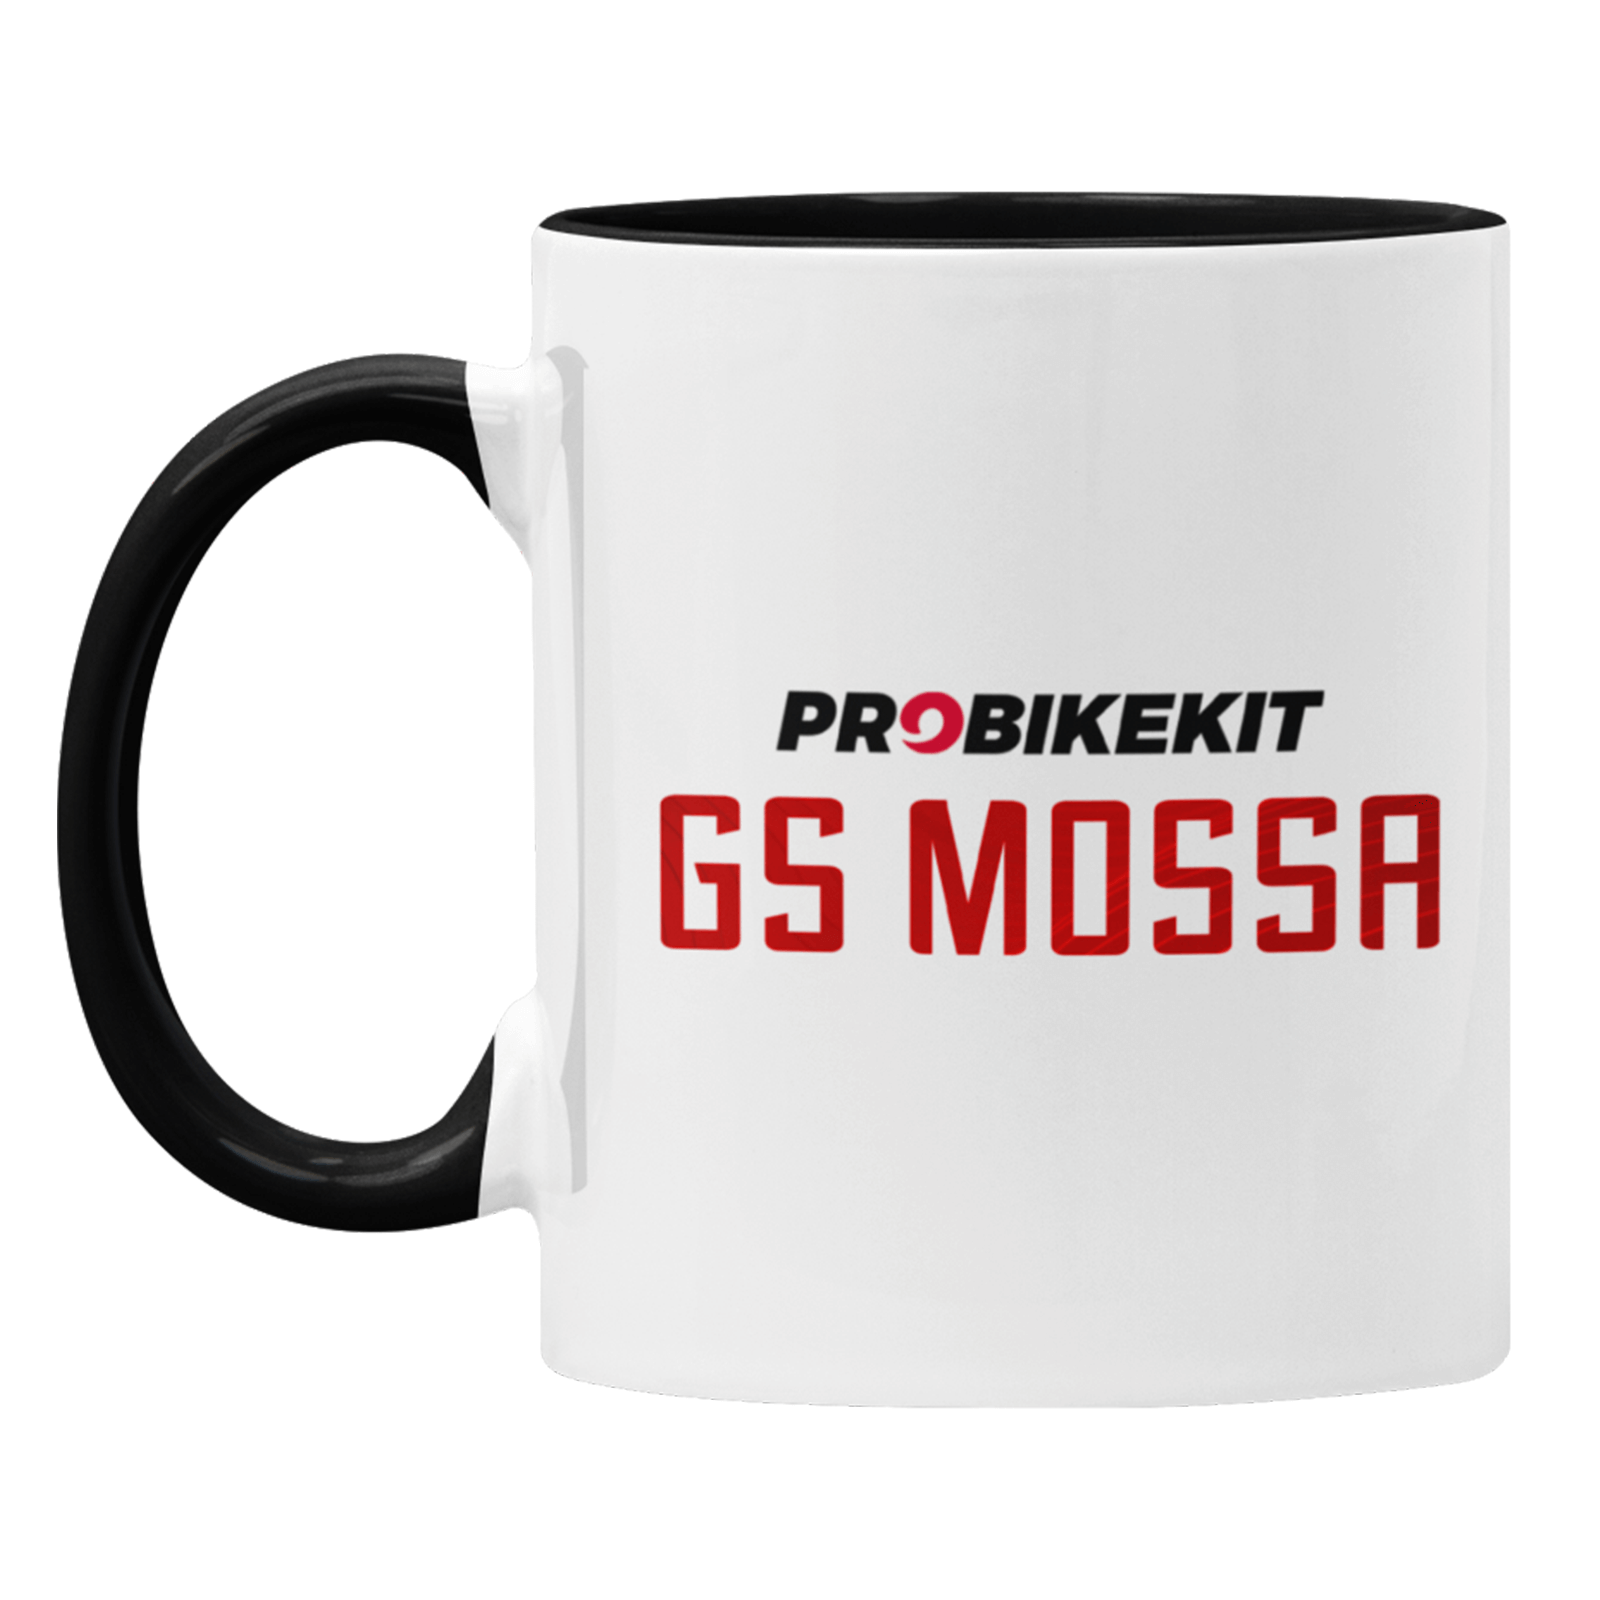 PBK GS Mossa Open Chest Logo Mug - Black